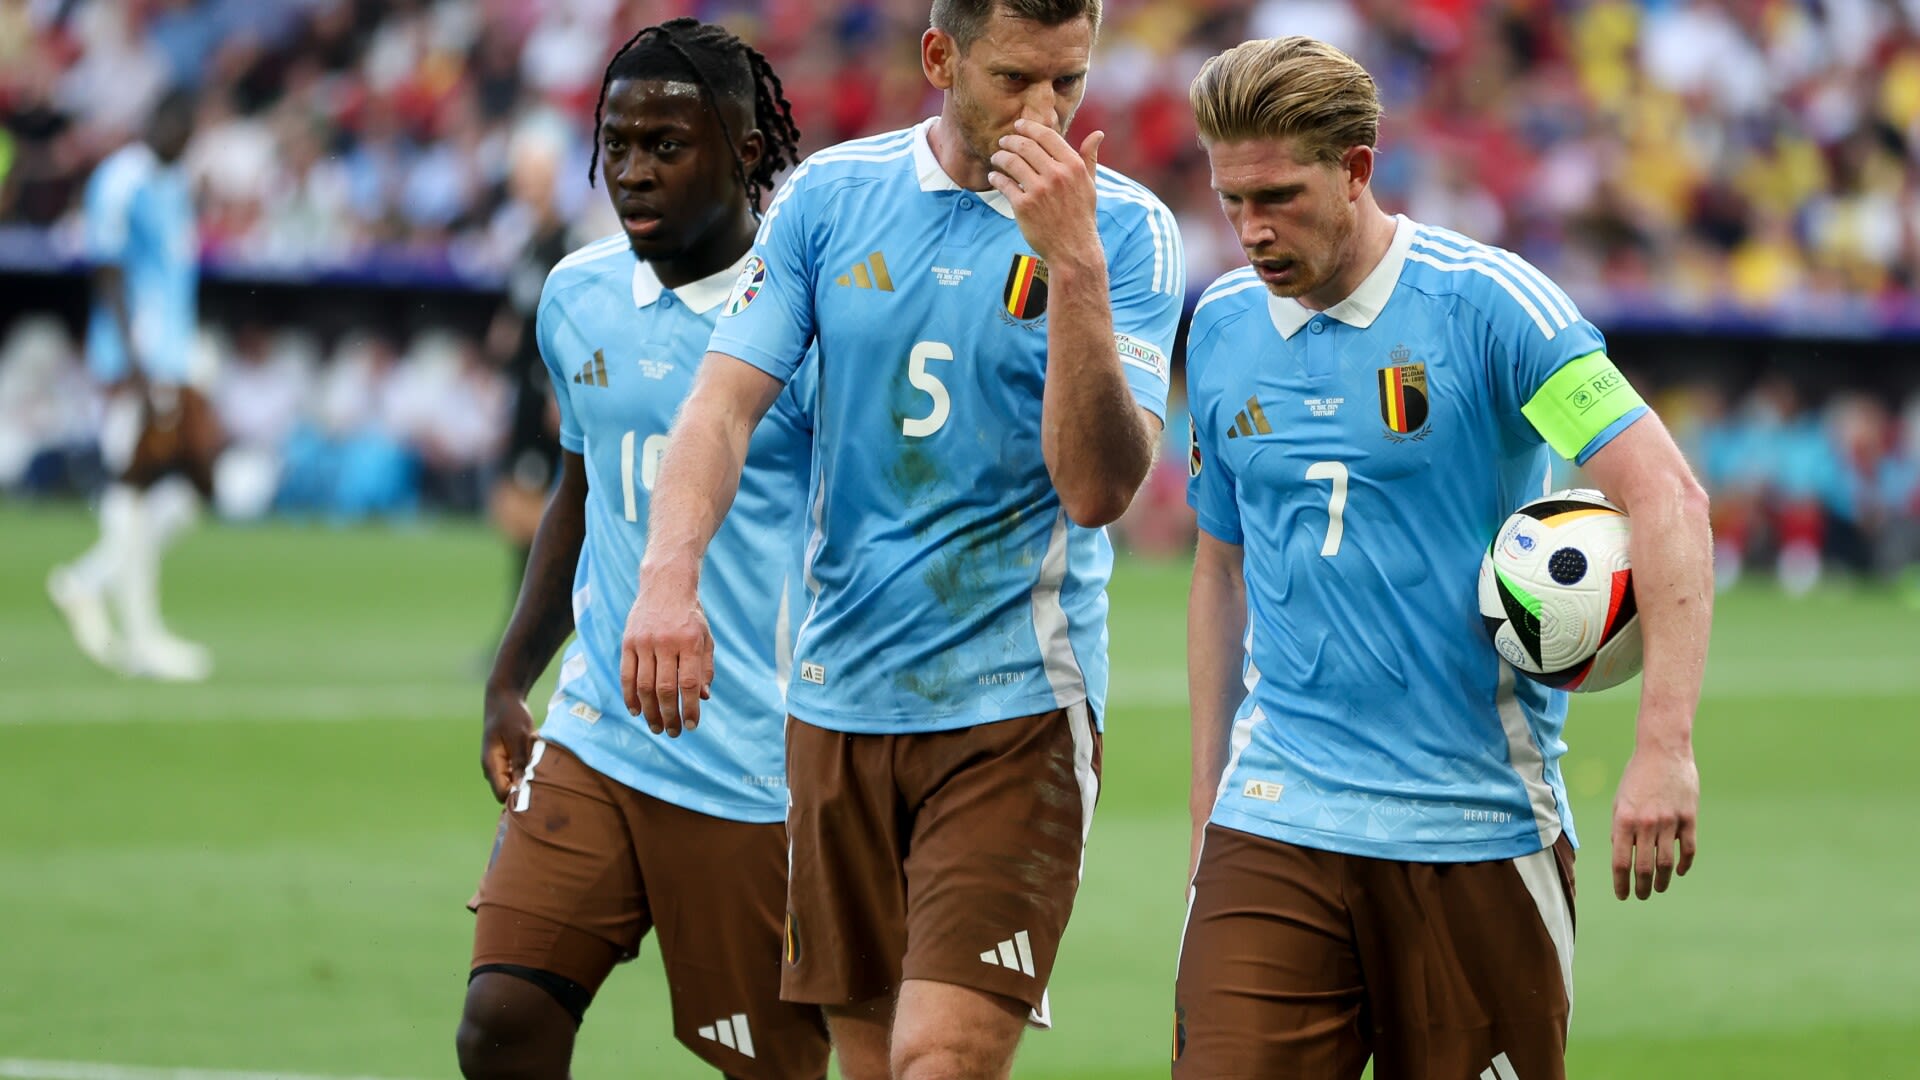 France vs Belgium: How to watch live, stream link, team news, prediction